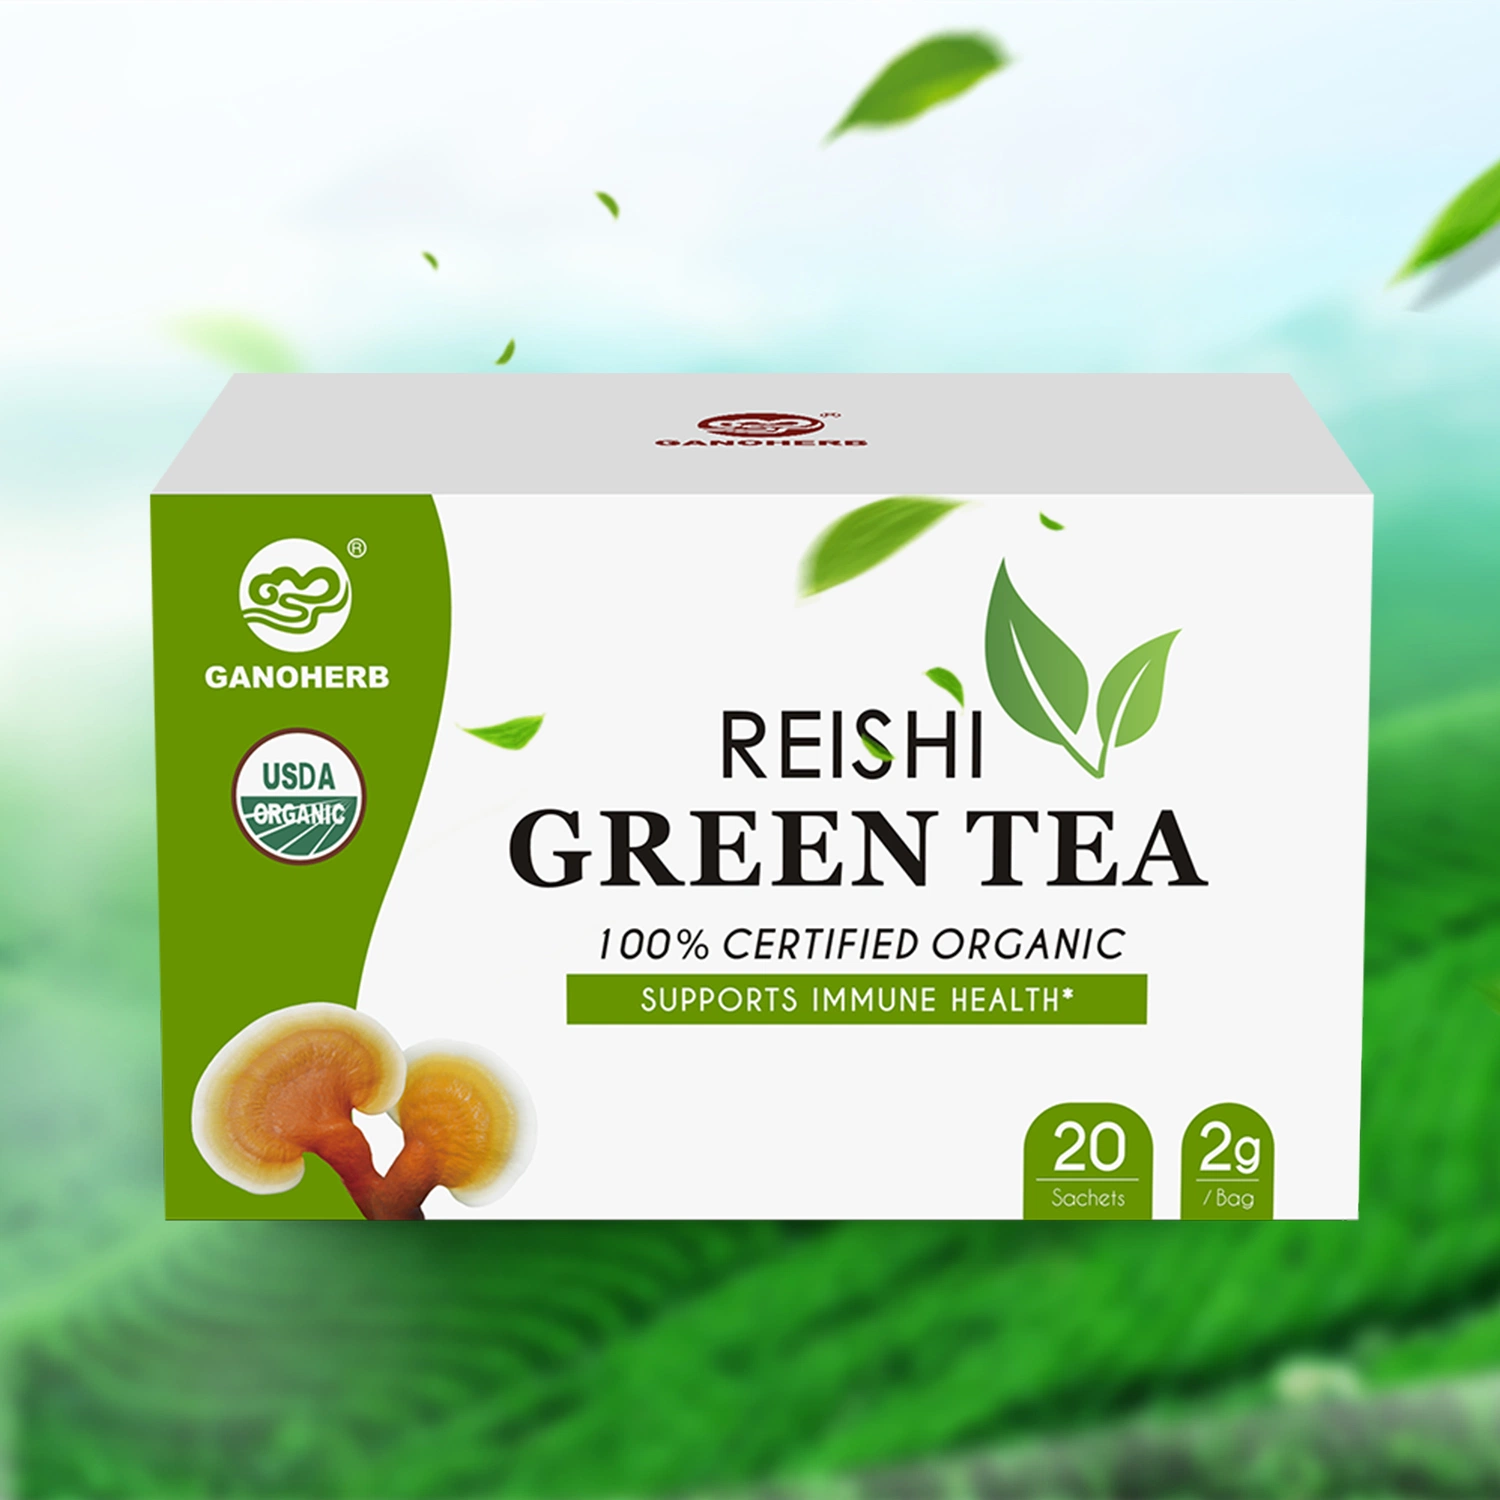 Hot Sale Wholesale/Supplier China Organic Herbal Reishi Room Ganoderma Linzhi Green Tea Bag Health Tea Manufacturer